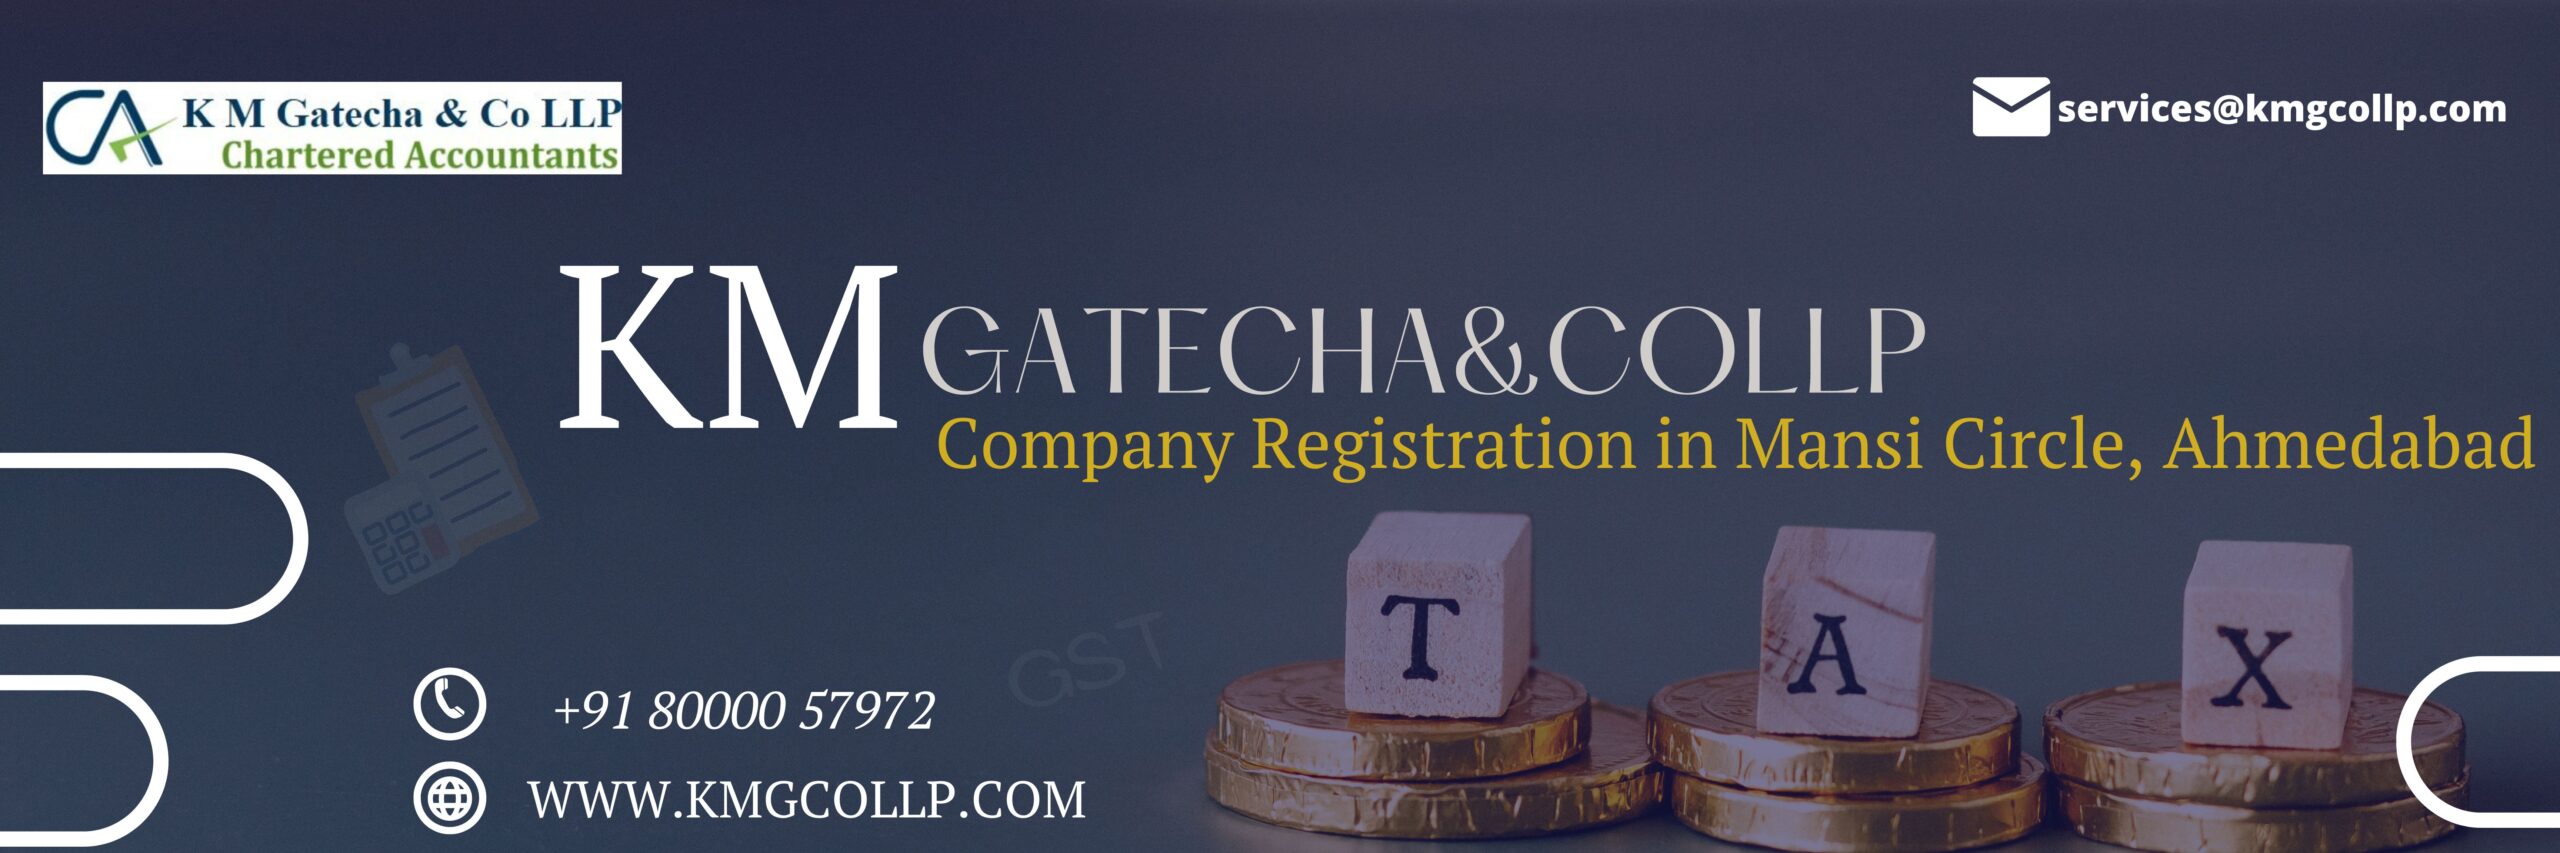 Company Registration in Mansi Circle, Ahmedabad